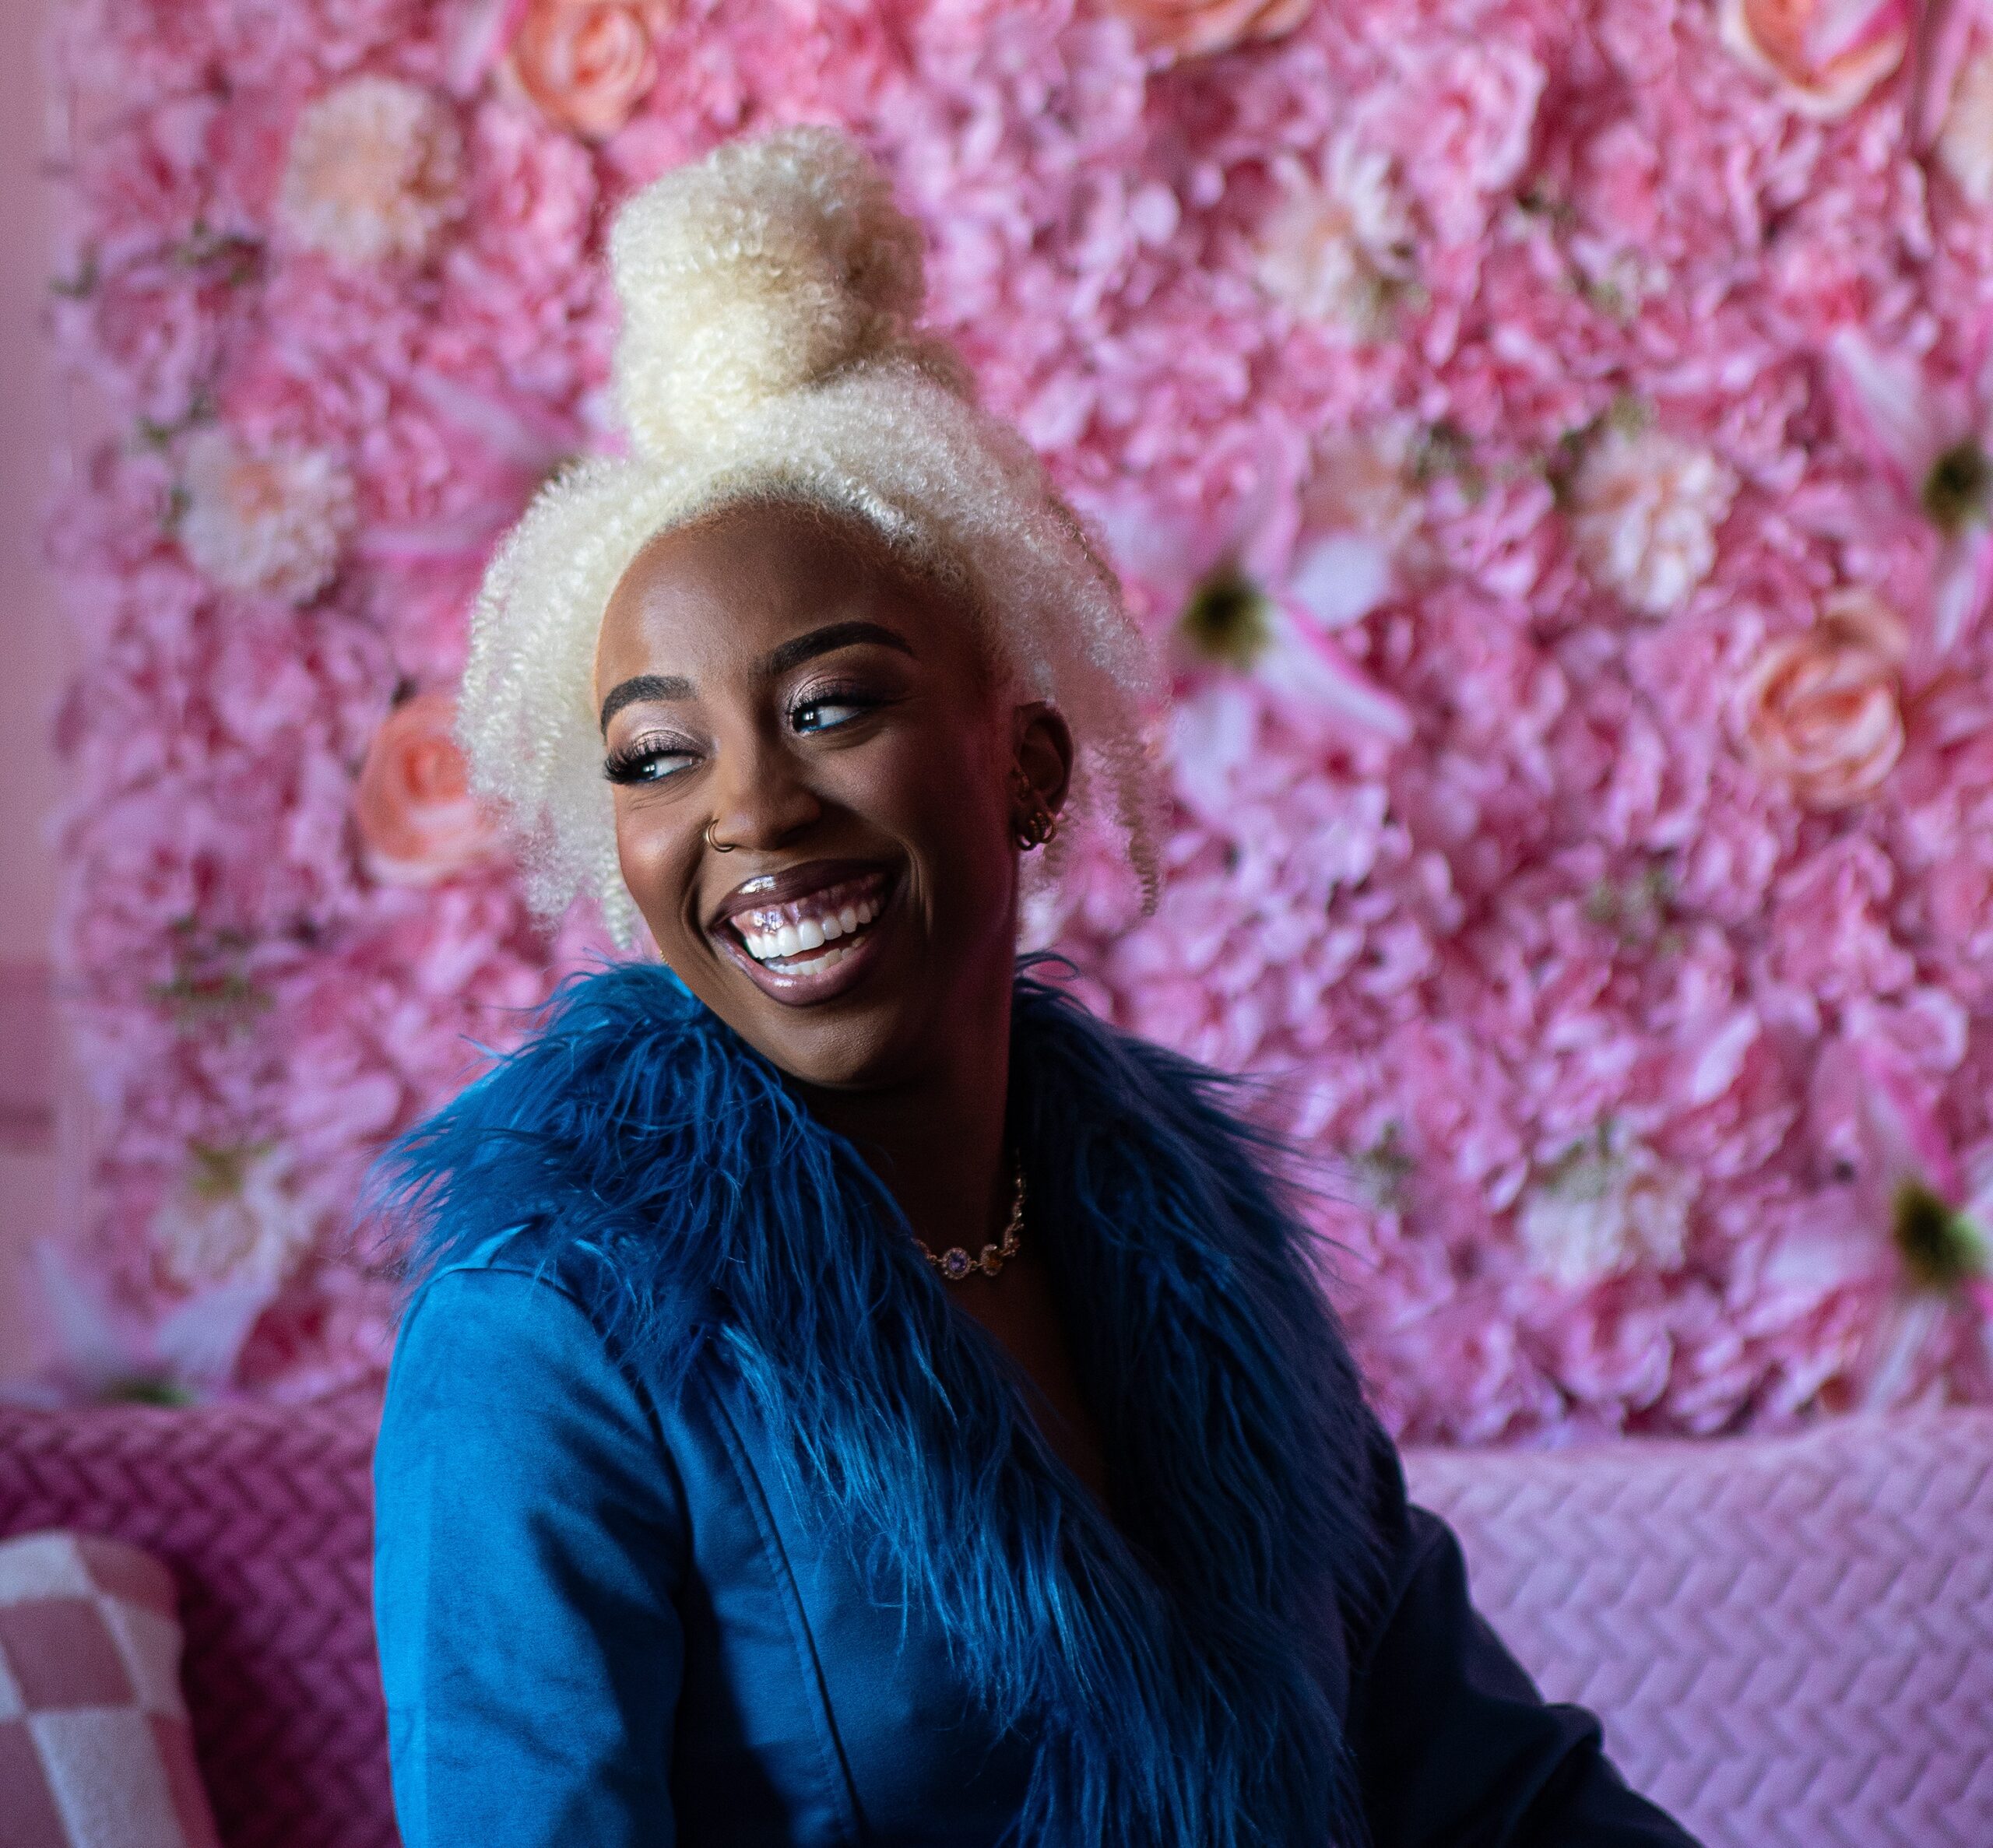 Nadirah Simmons celebrates ‘Hip-Hop Ladies’ as trailblazing artists in pop culture history book